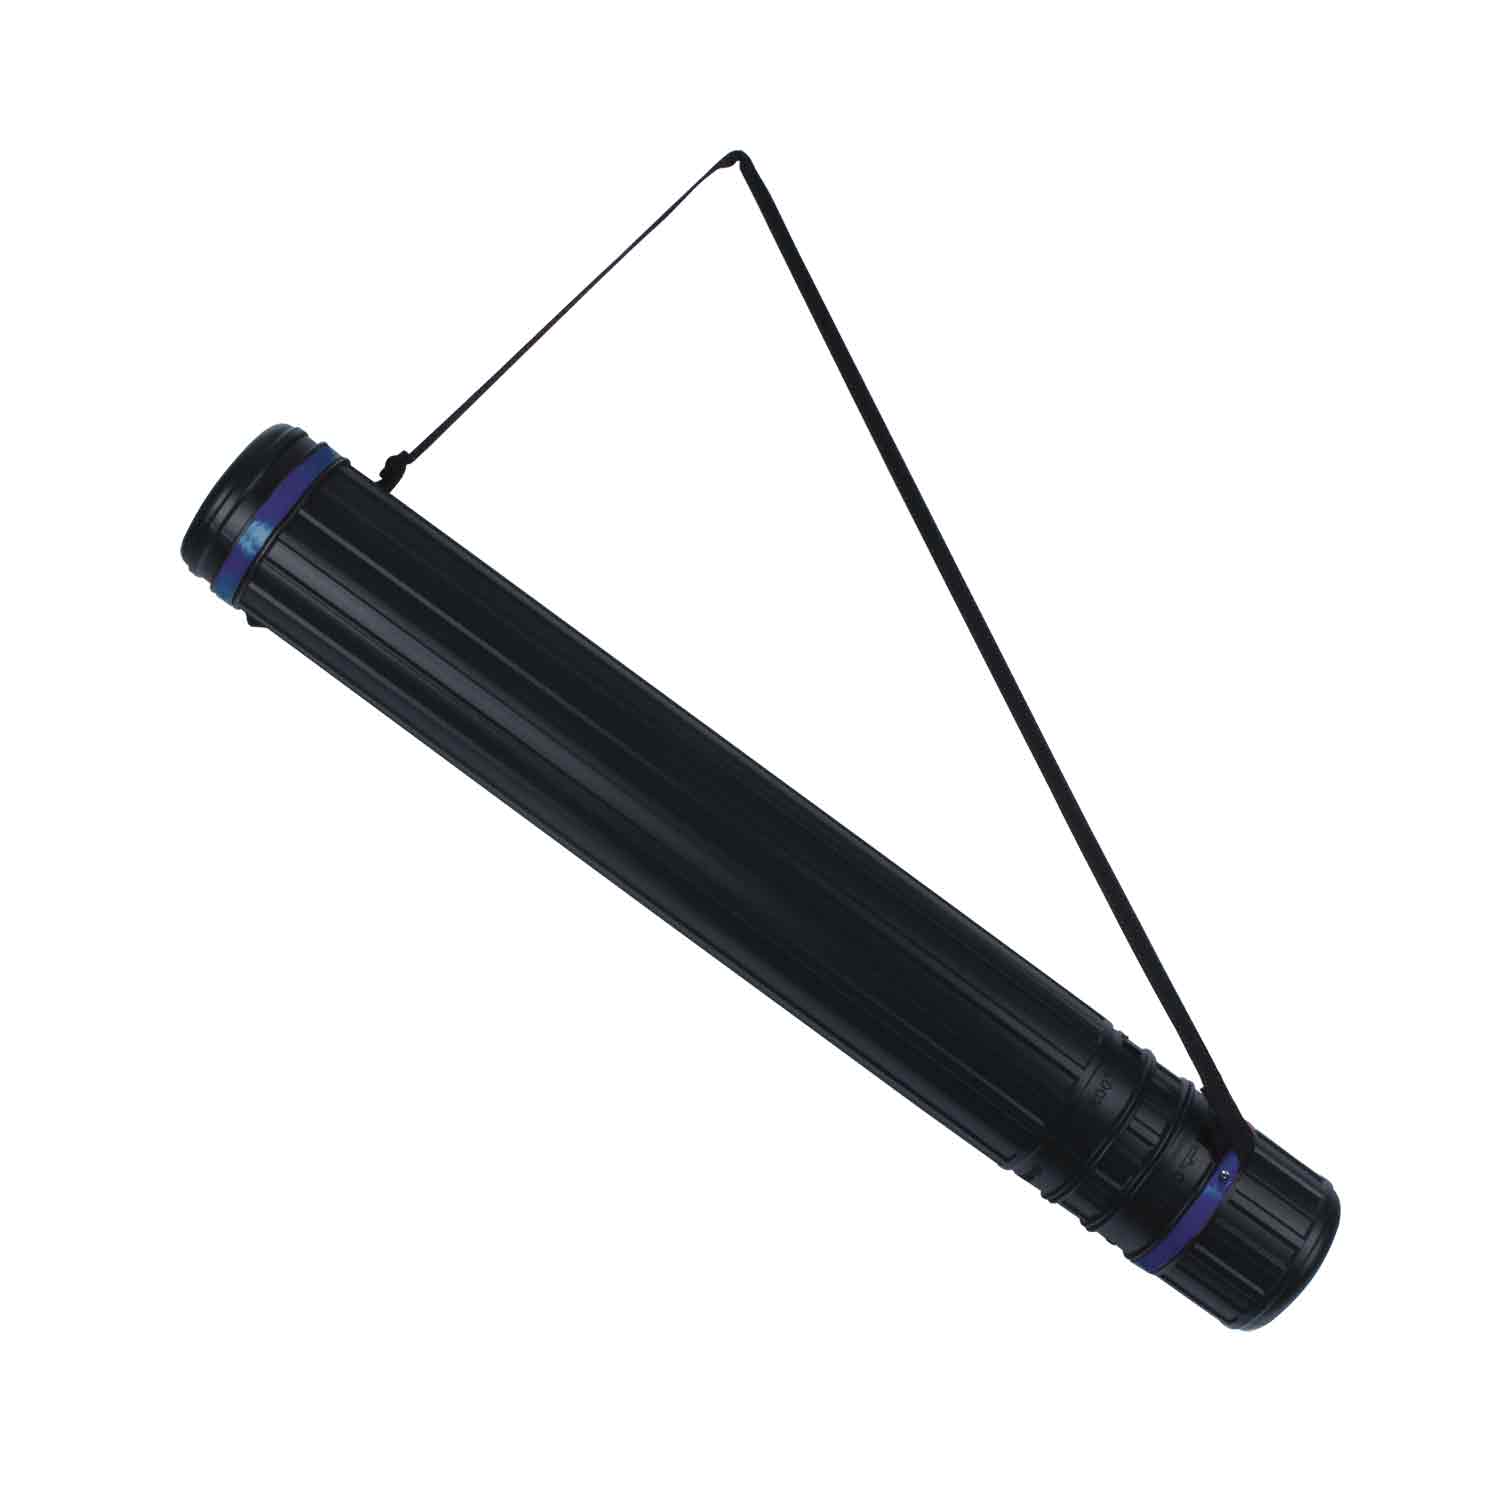 X-Spot Economy Arrow Tube – Lancaster Archery Supply